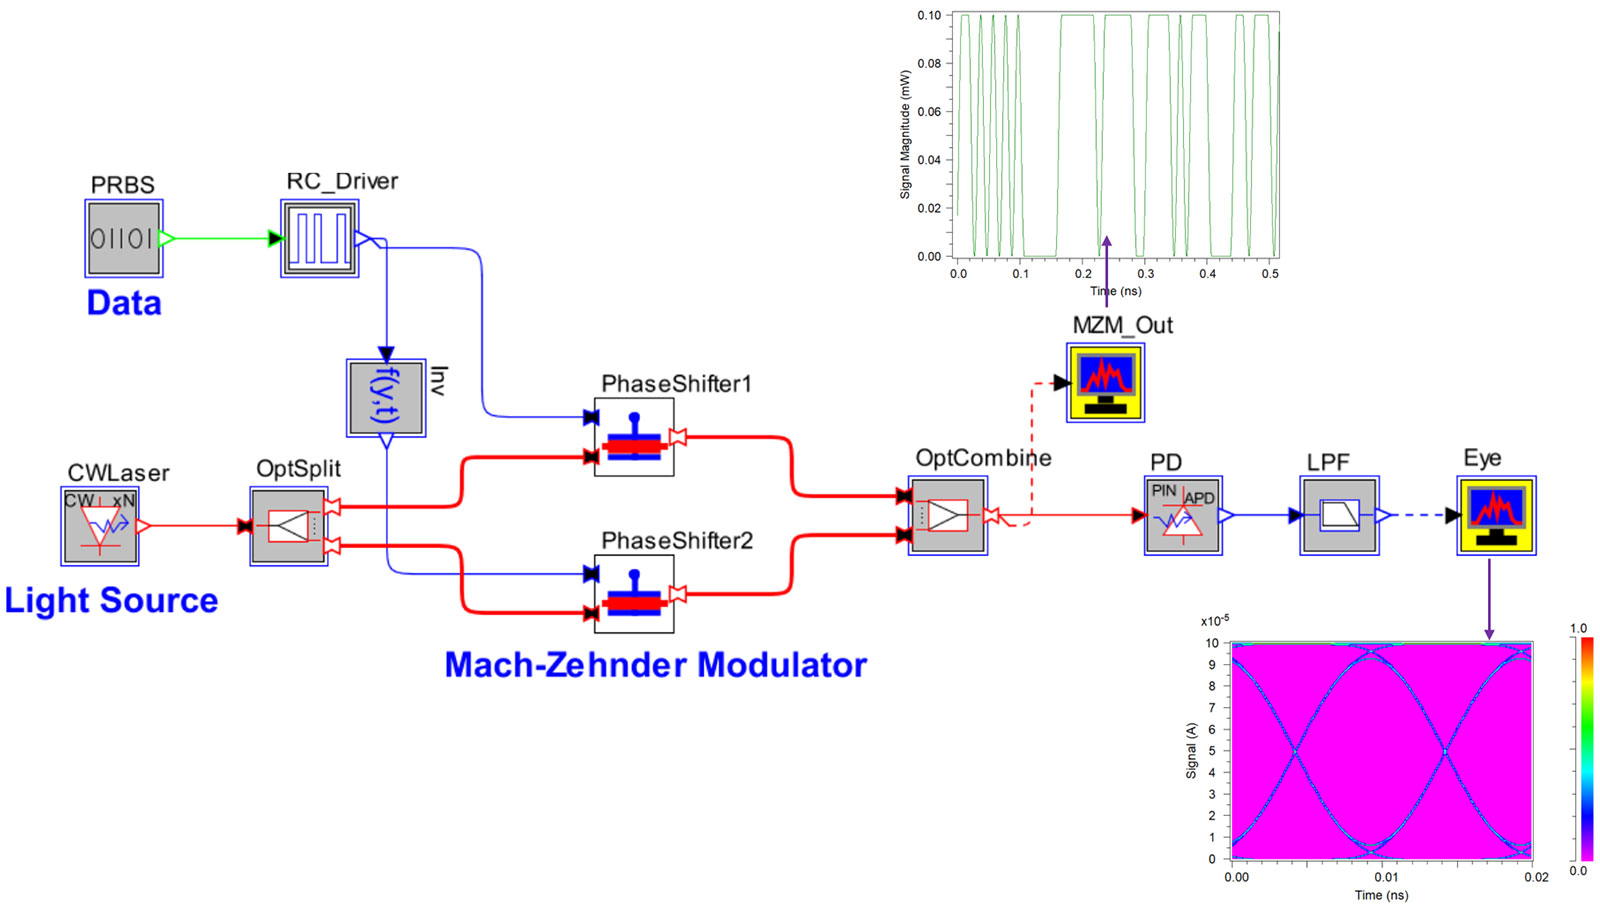 how to import mach-zhender modulator to optisystem 14